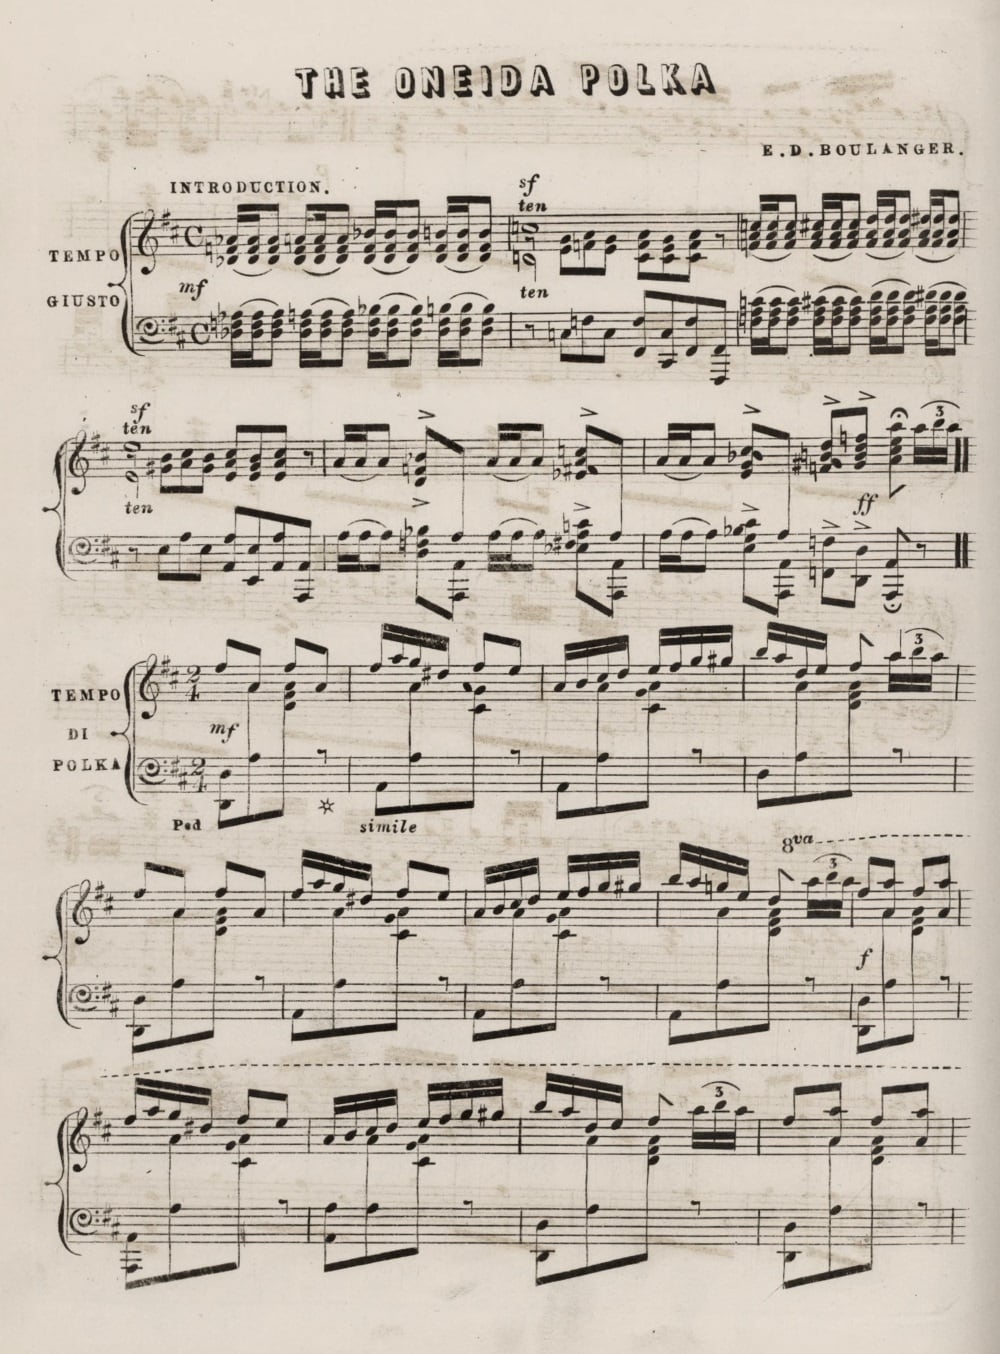 The Oneida polka, by Boulanger (Sydney: Clarke, [1857])